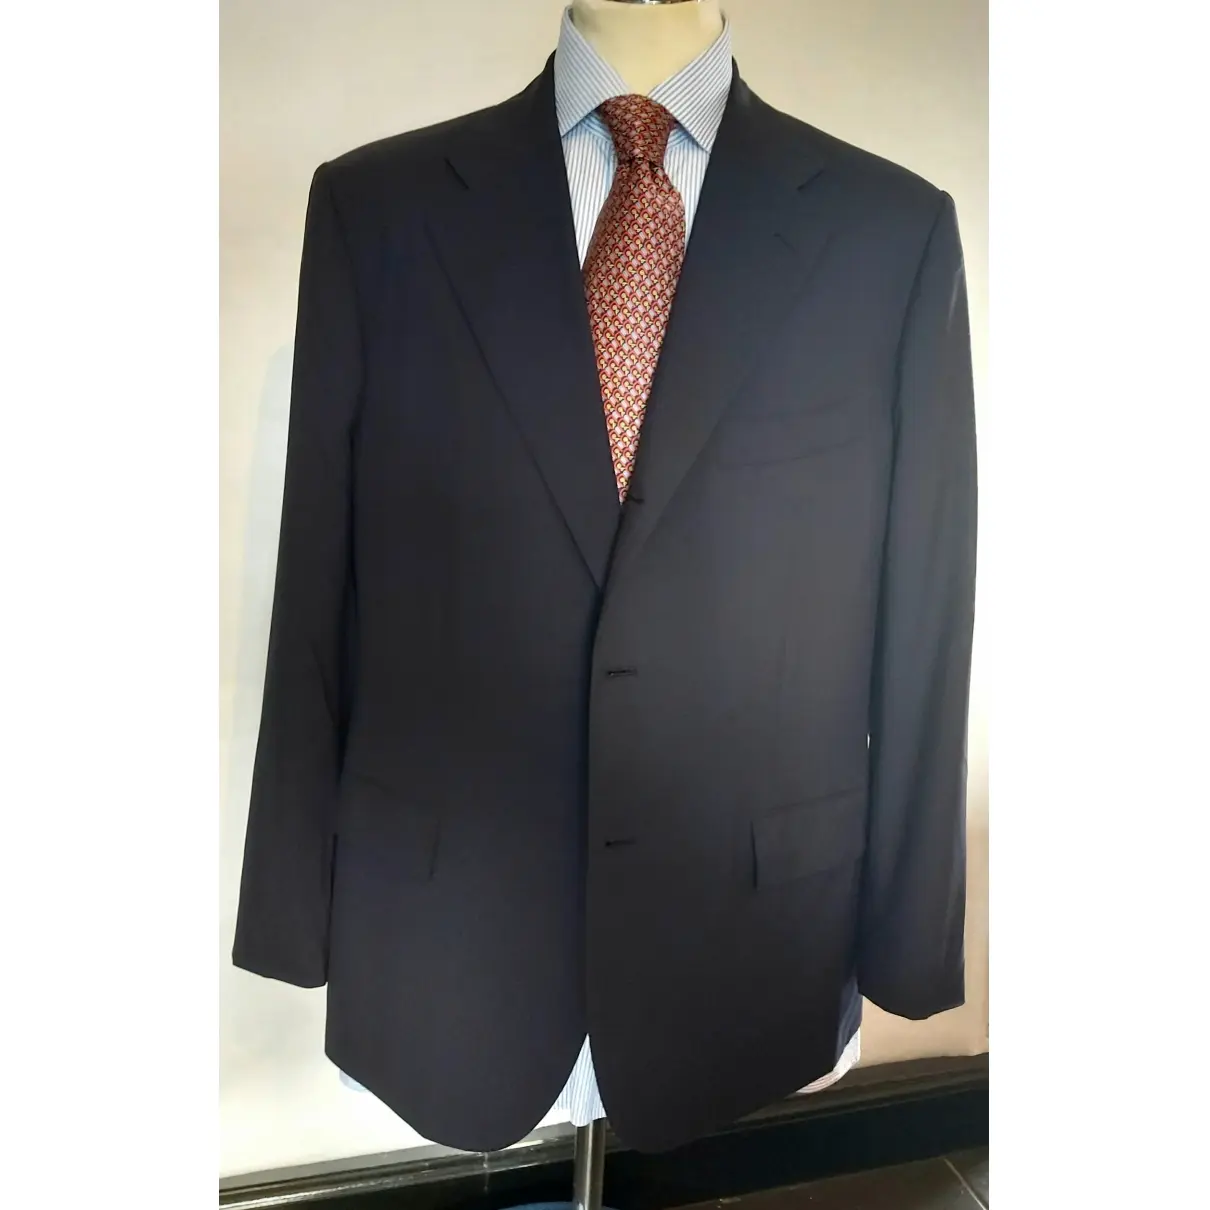 Buy Kiton Suit online